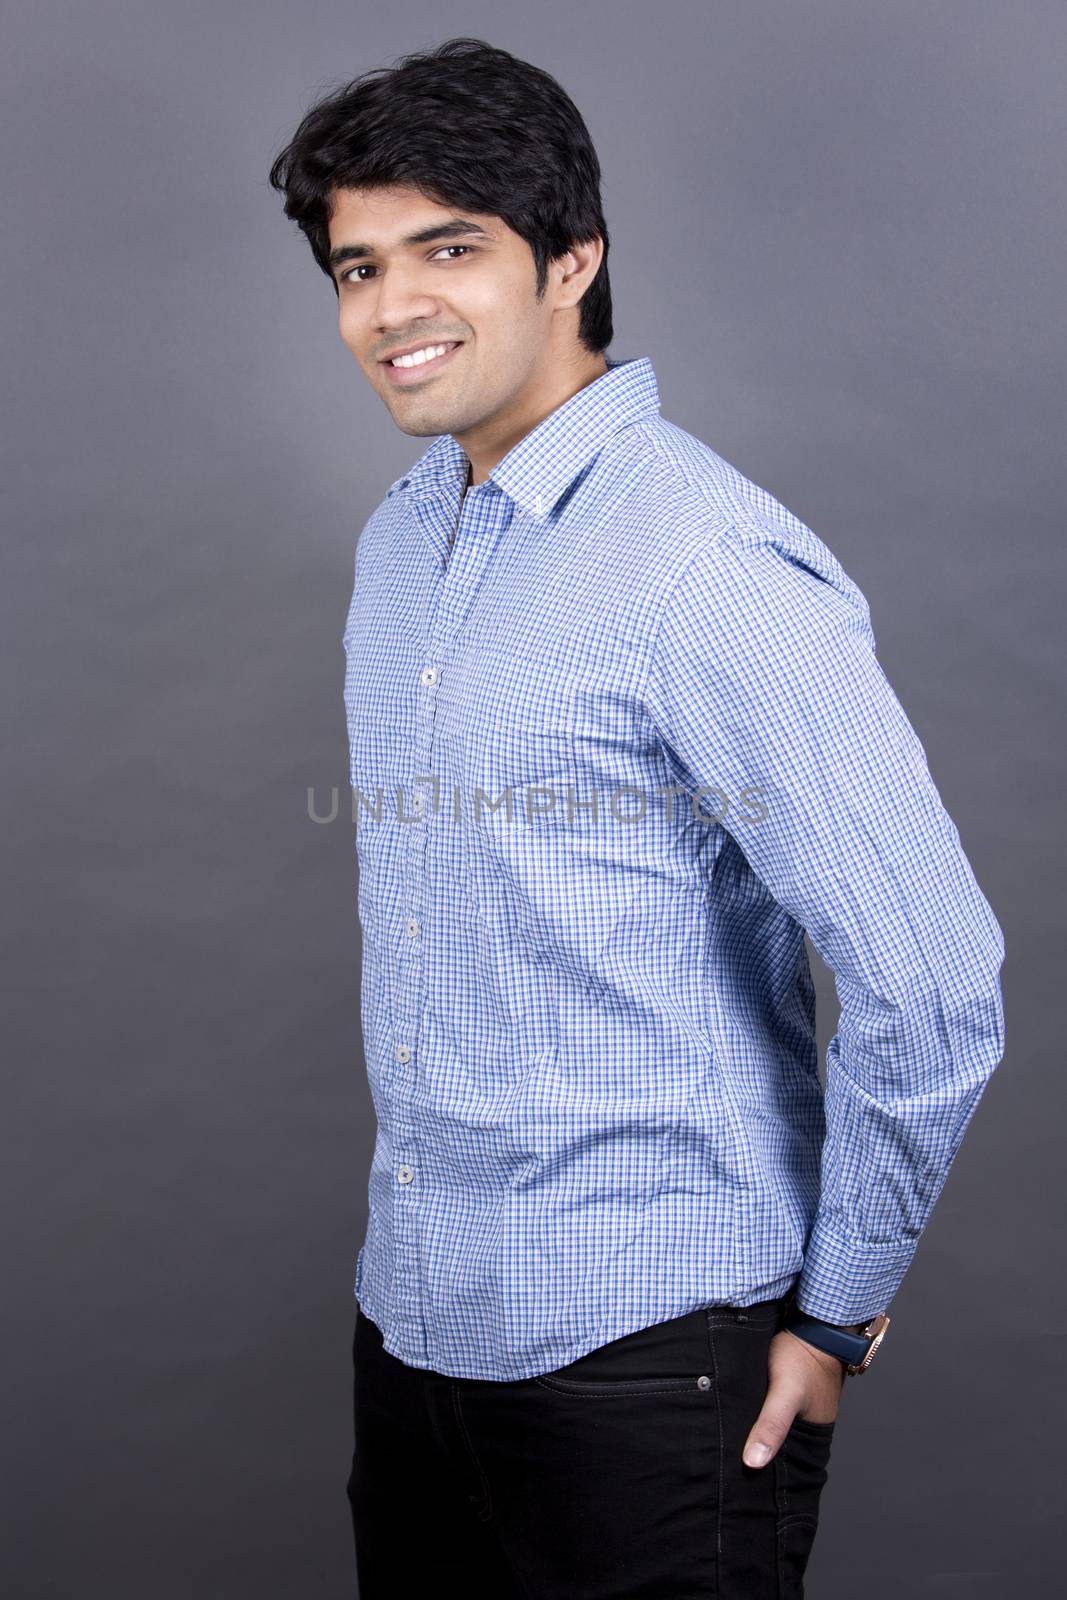 handsome east indian man wearing blue shirt on light grey background